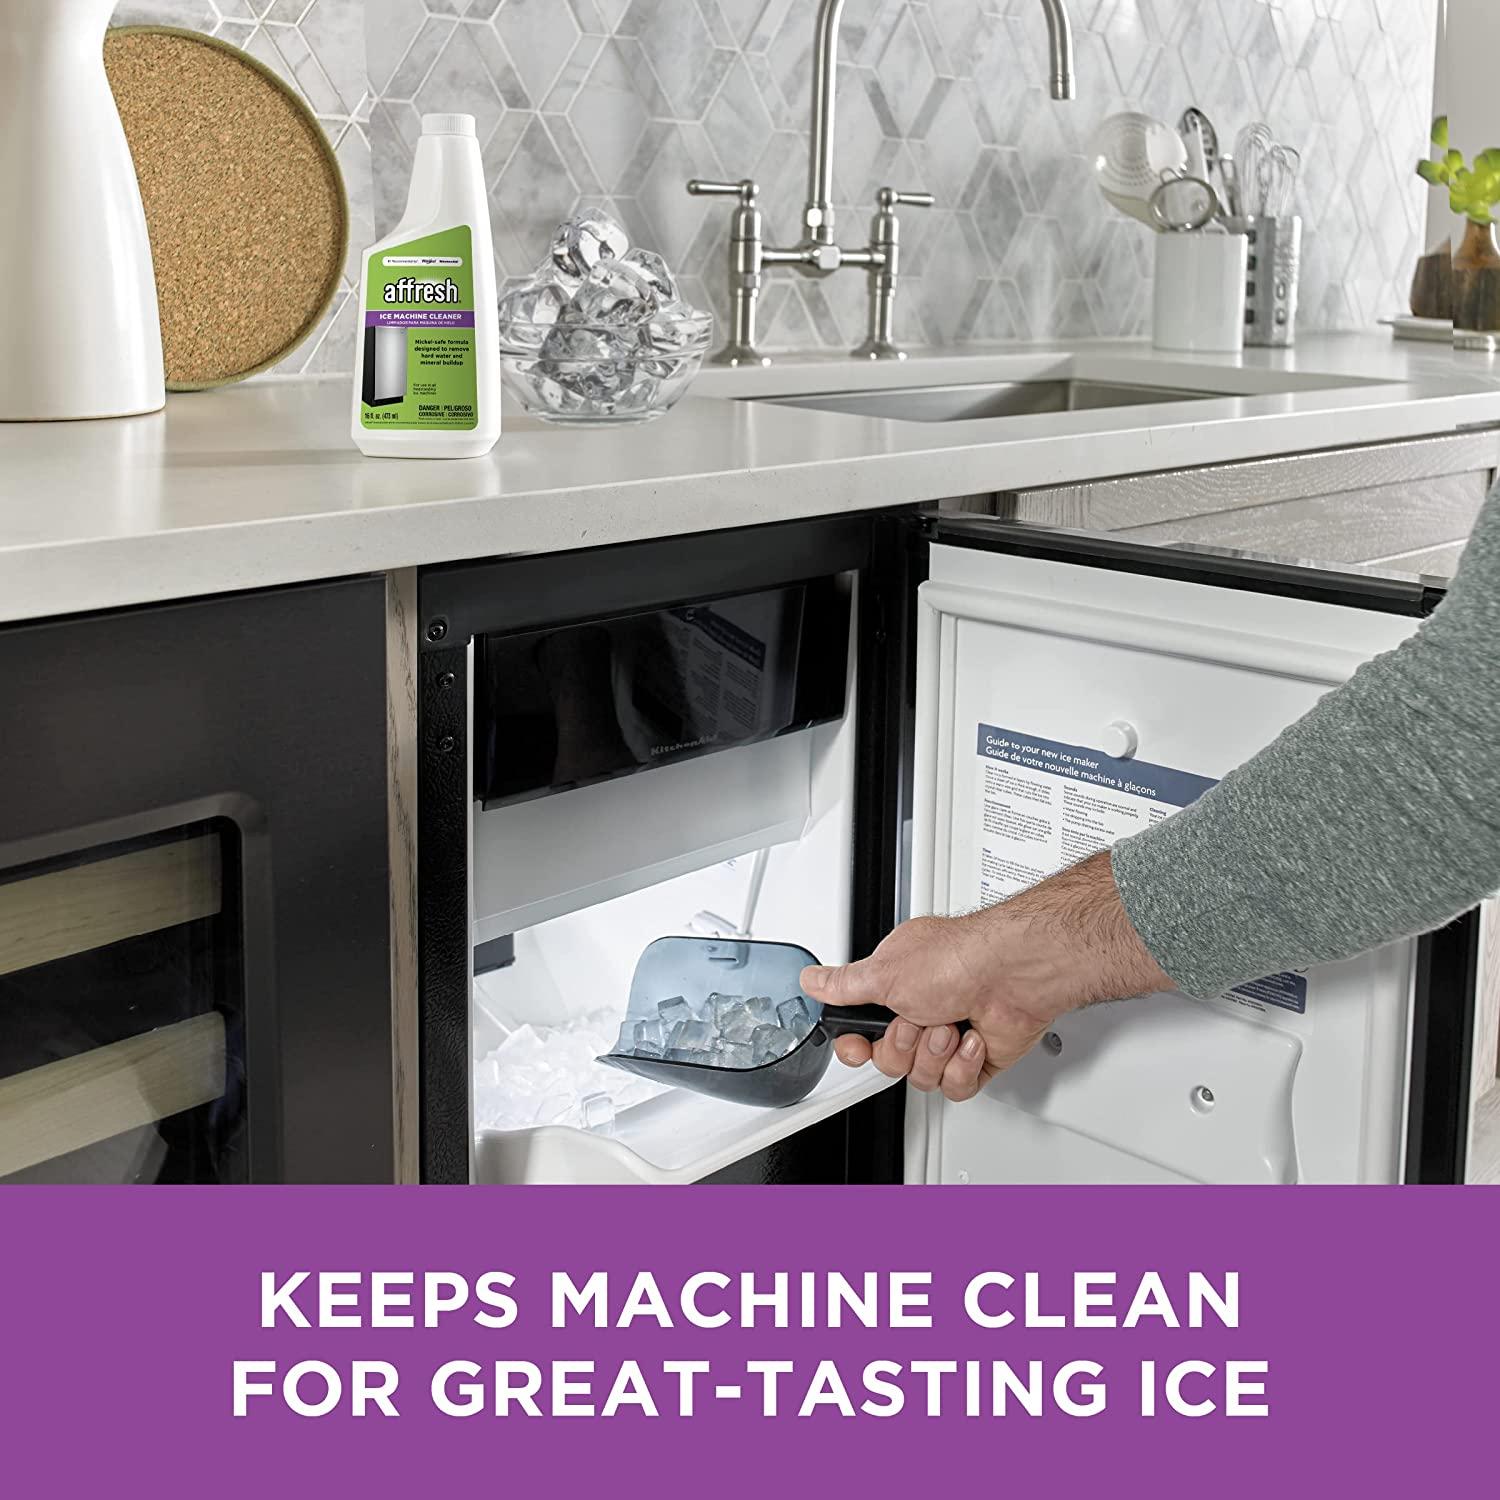 Affresh Ice Machine Cleaner